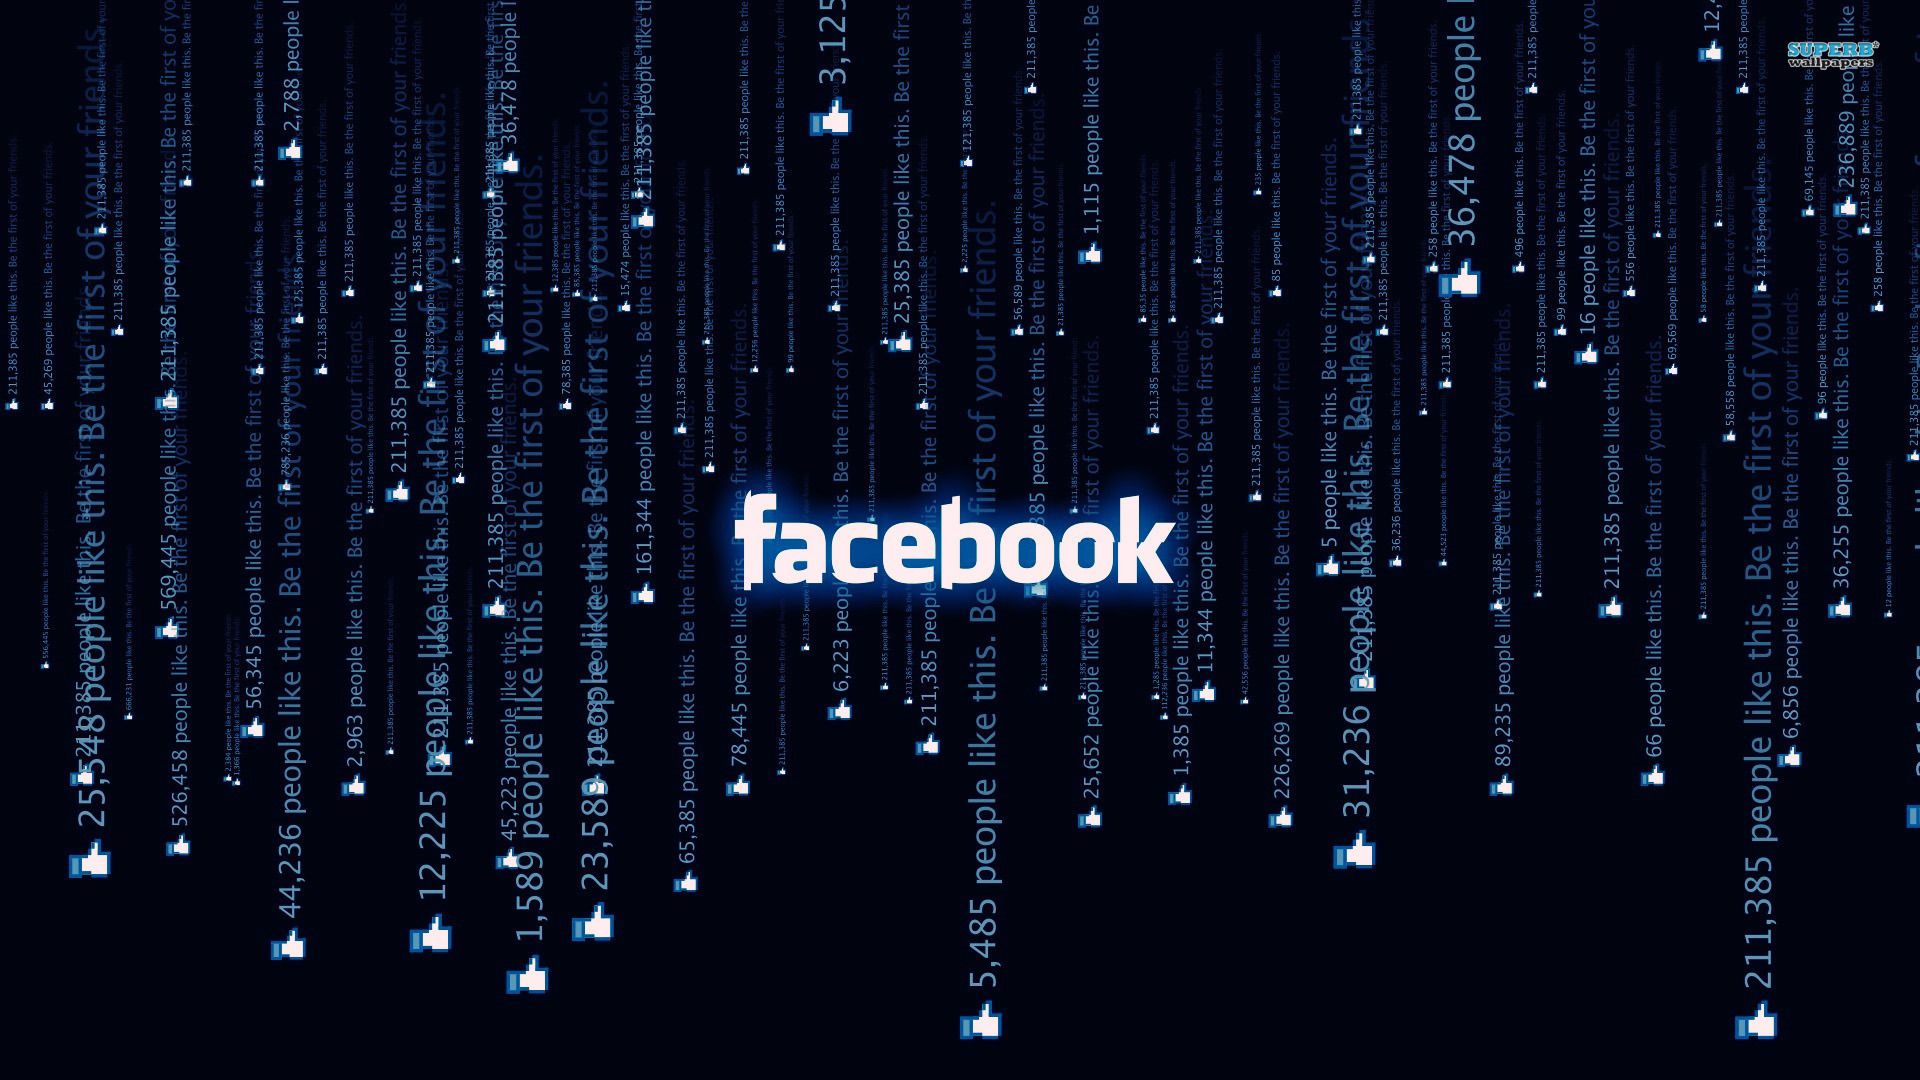 Facebook wallpaper - Computer wallpapers -